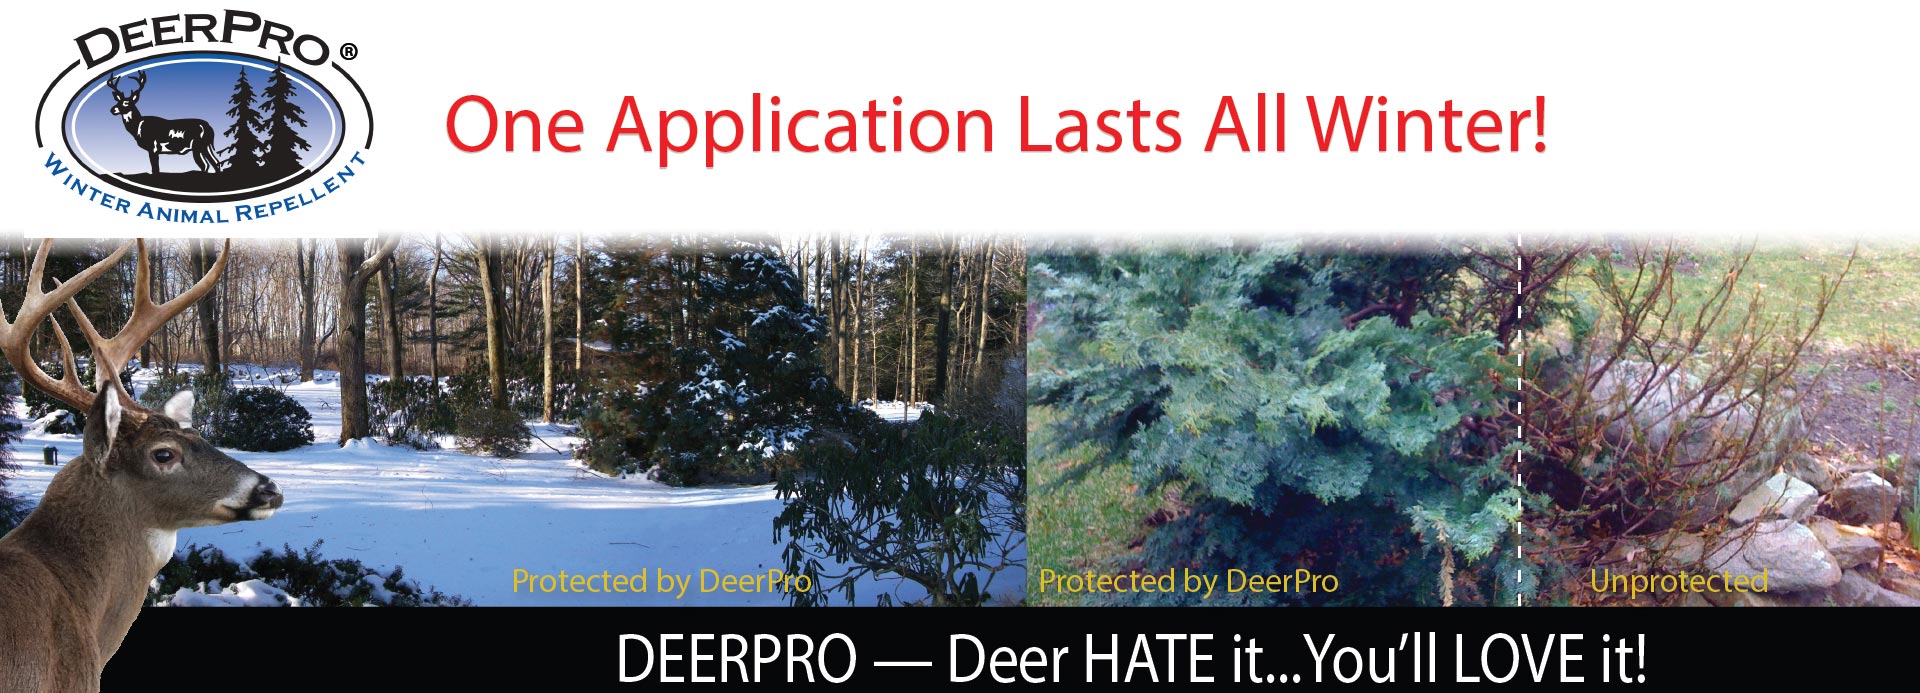 Nott Products DeerPro Winter banner